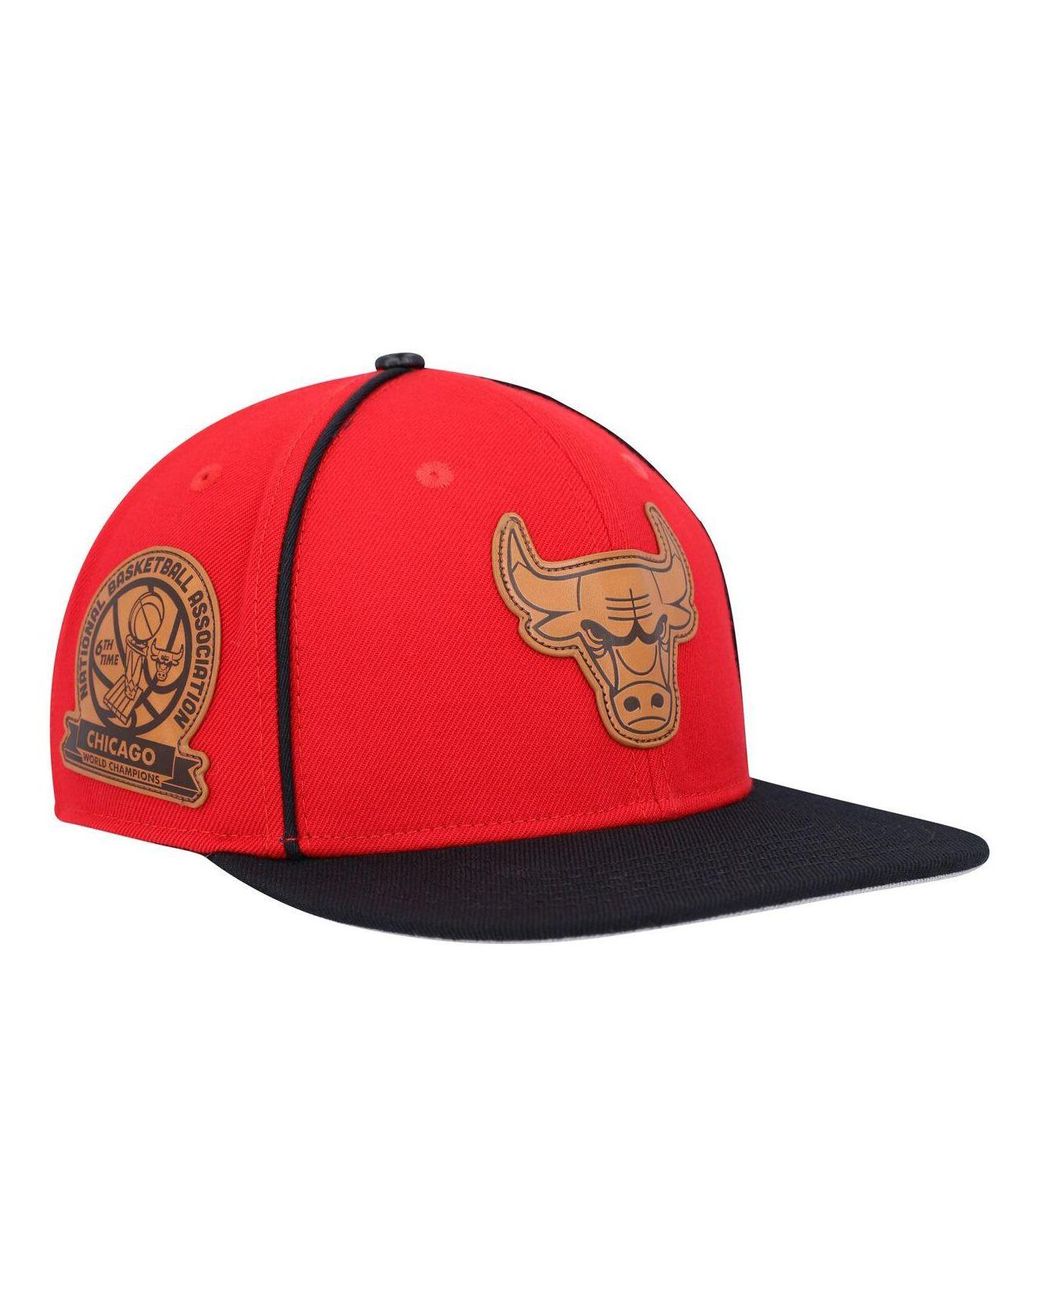 Pro Standard Men's Royal, Black Golden State Warriors Heritage Leather  Patch Snapback Hat